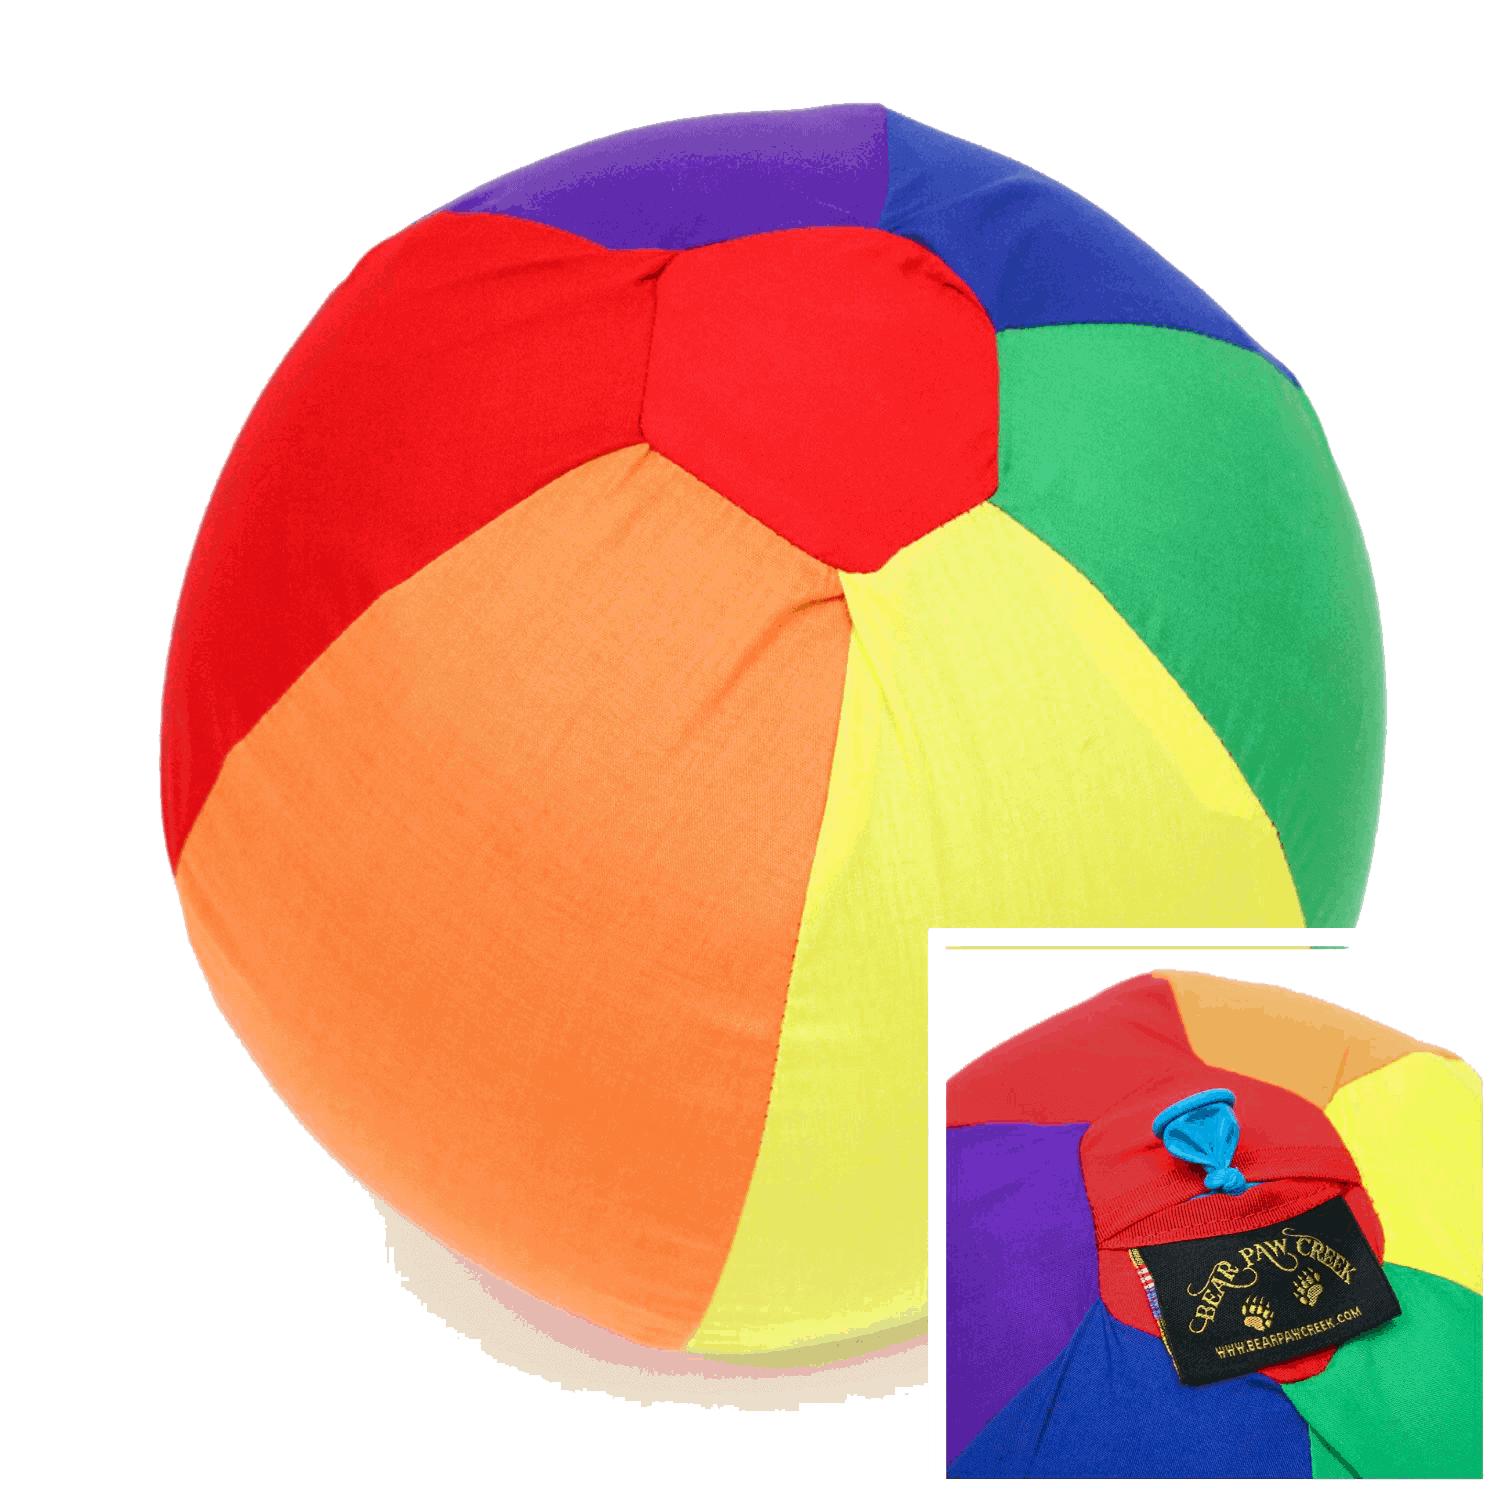 Colorful-Music-Education-Tool-Rainbow-Balloon-Ball-Parents